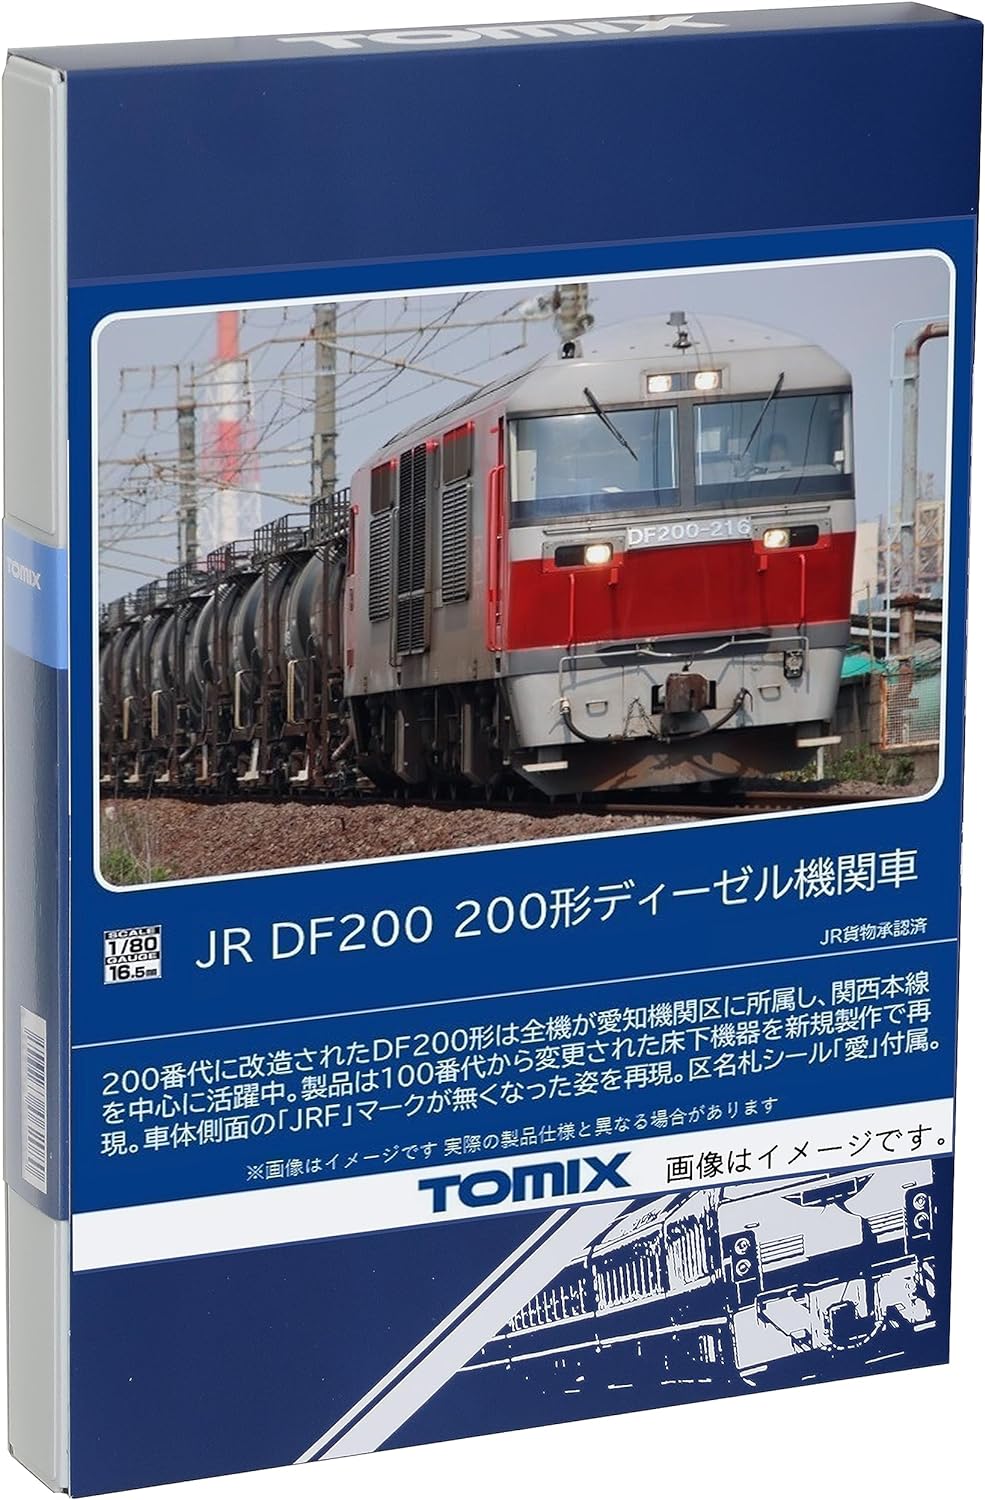 Tomix Train Model (HO) | BanzaiHobby